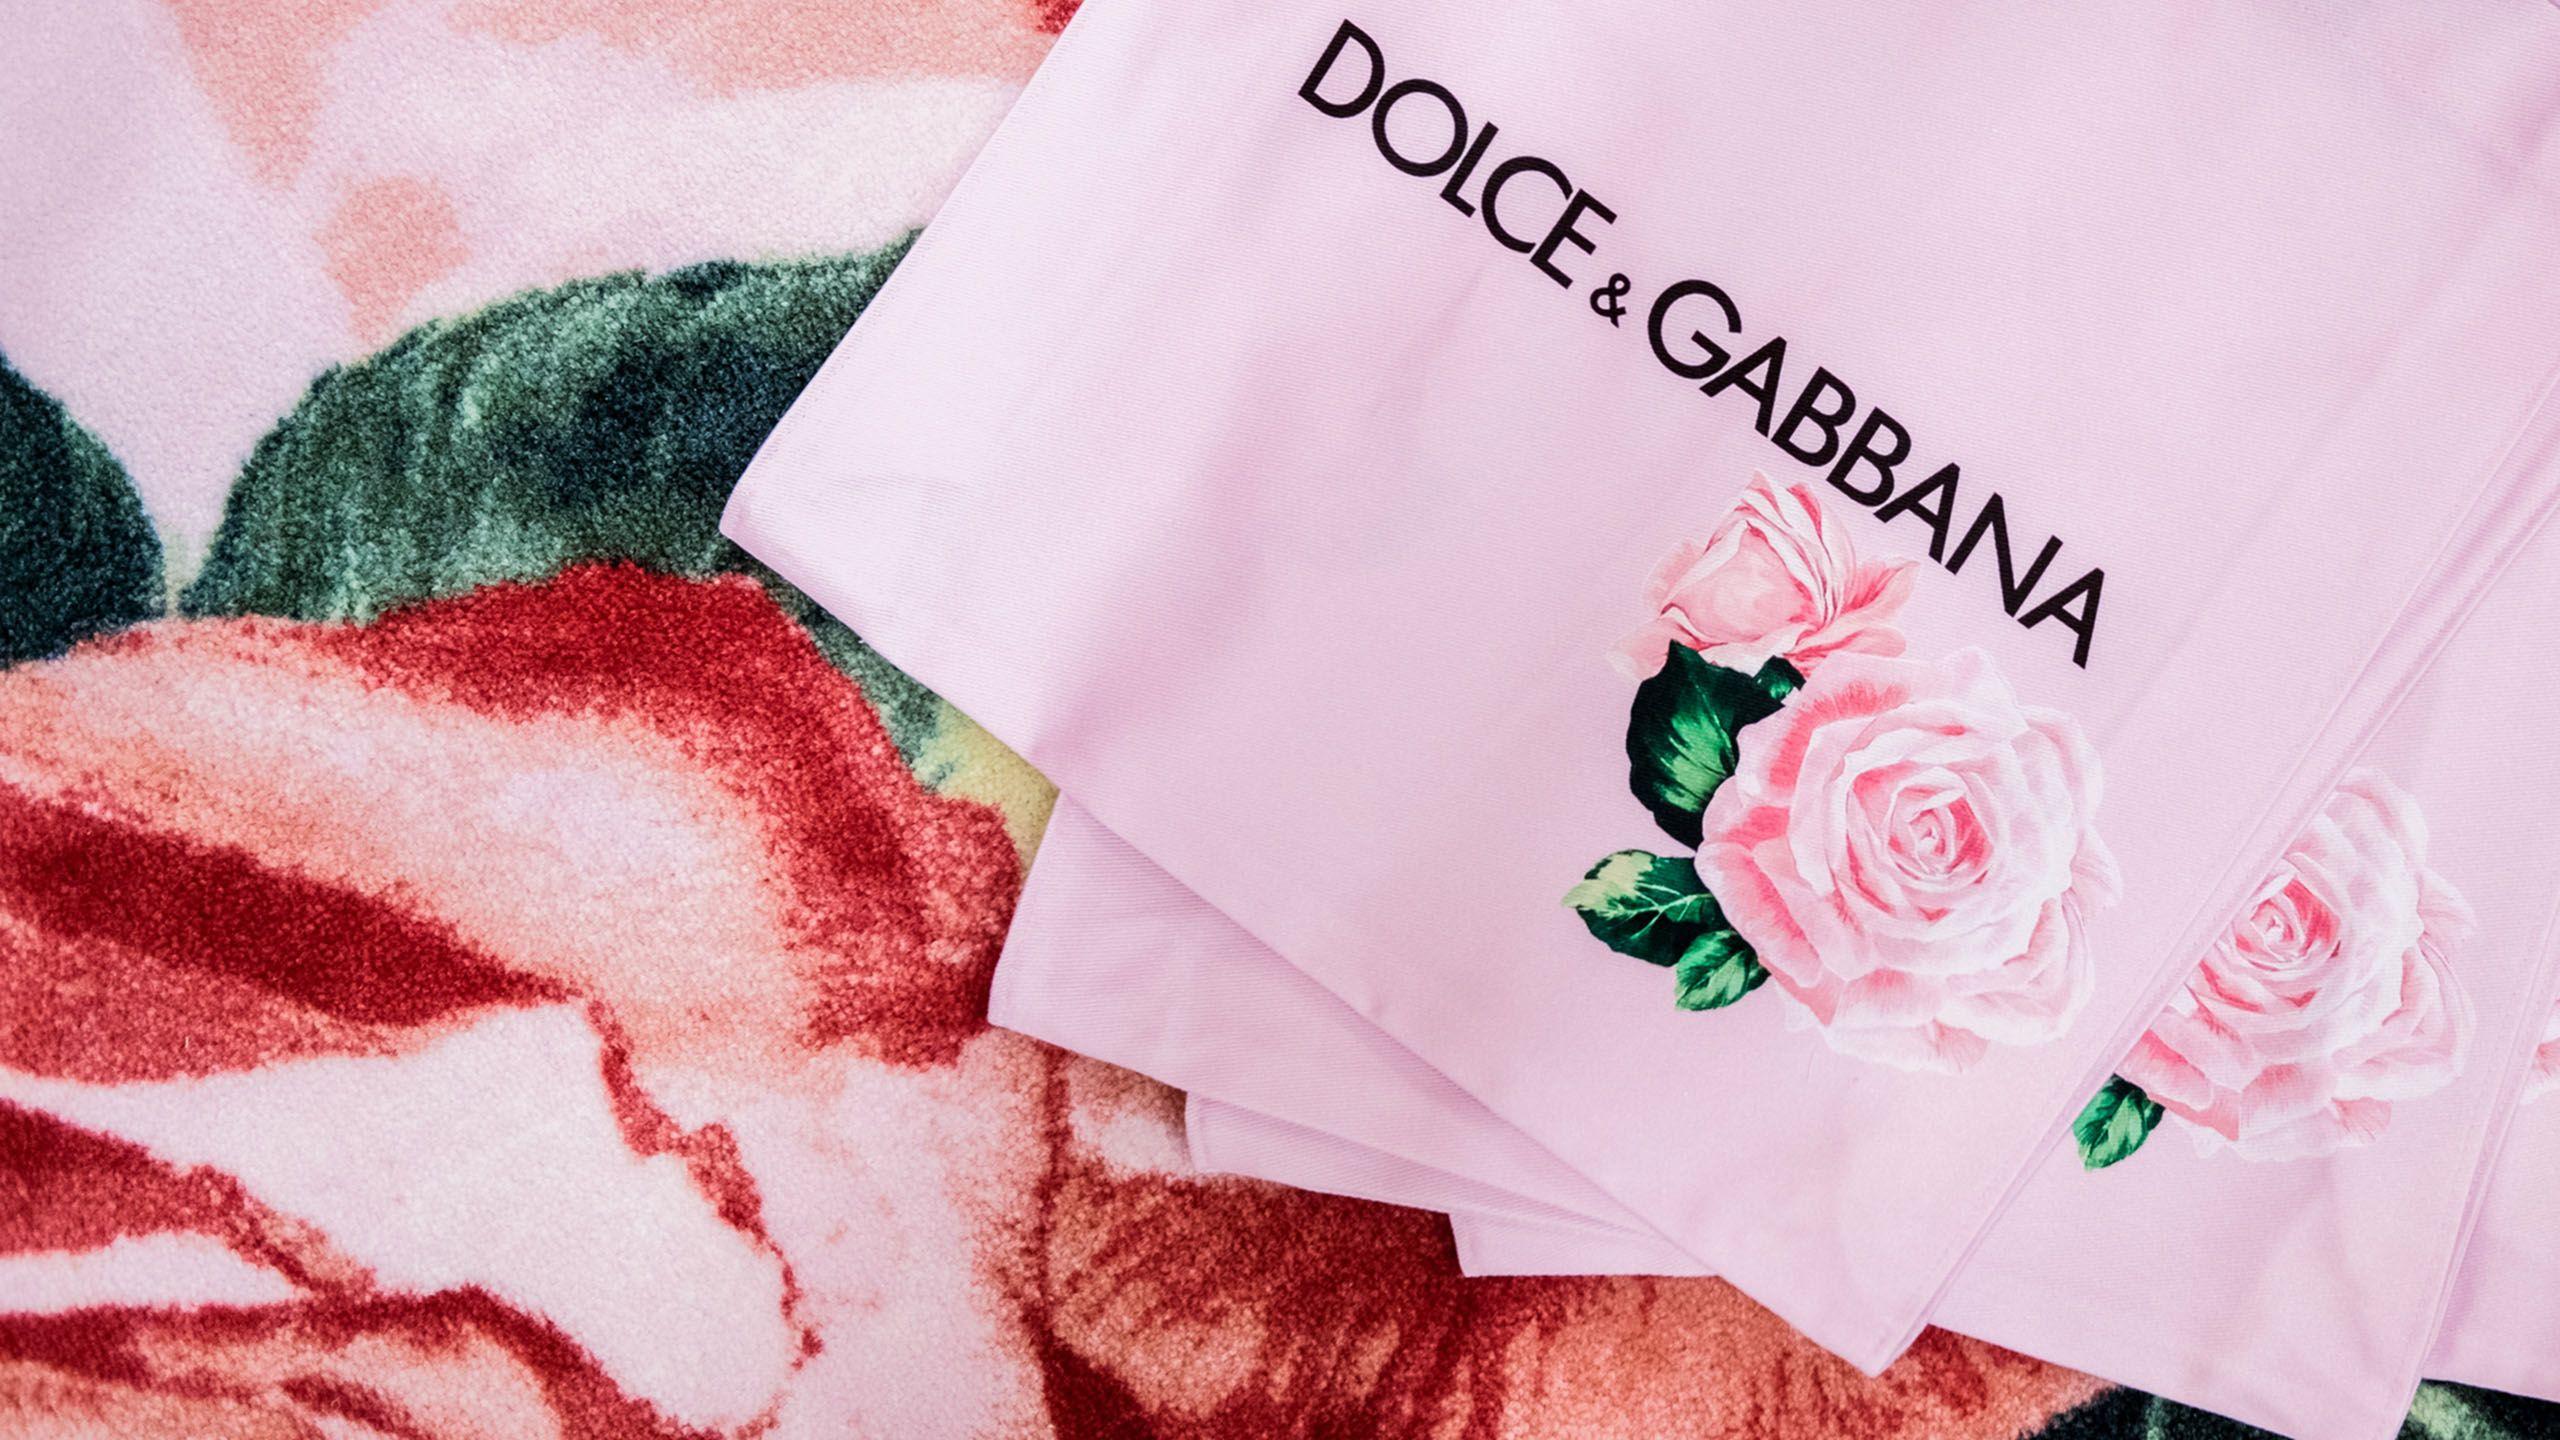 Dolce Gabbana Logo Wallpaper 2560x1440